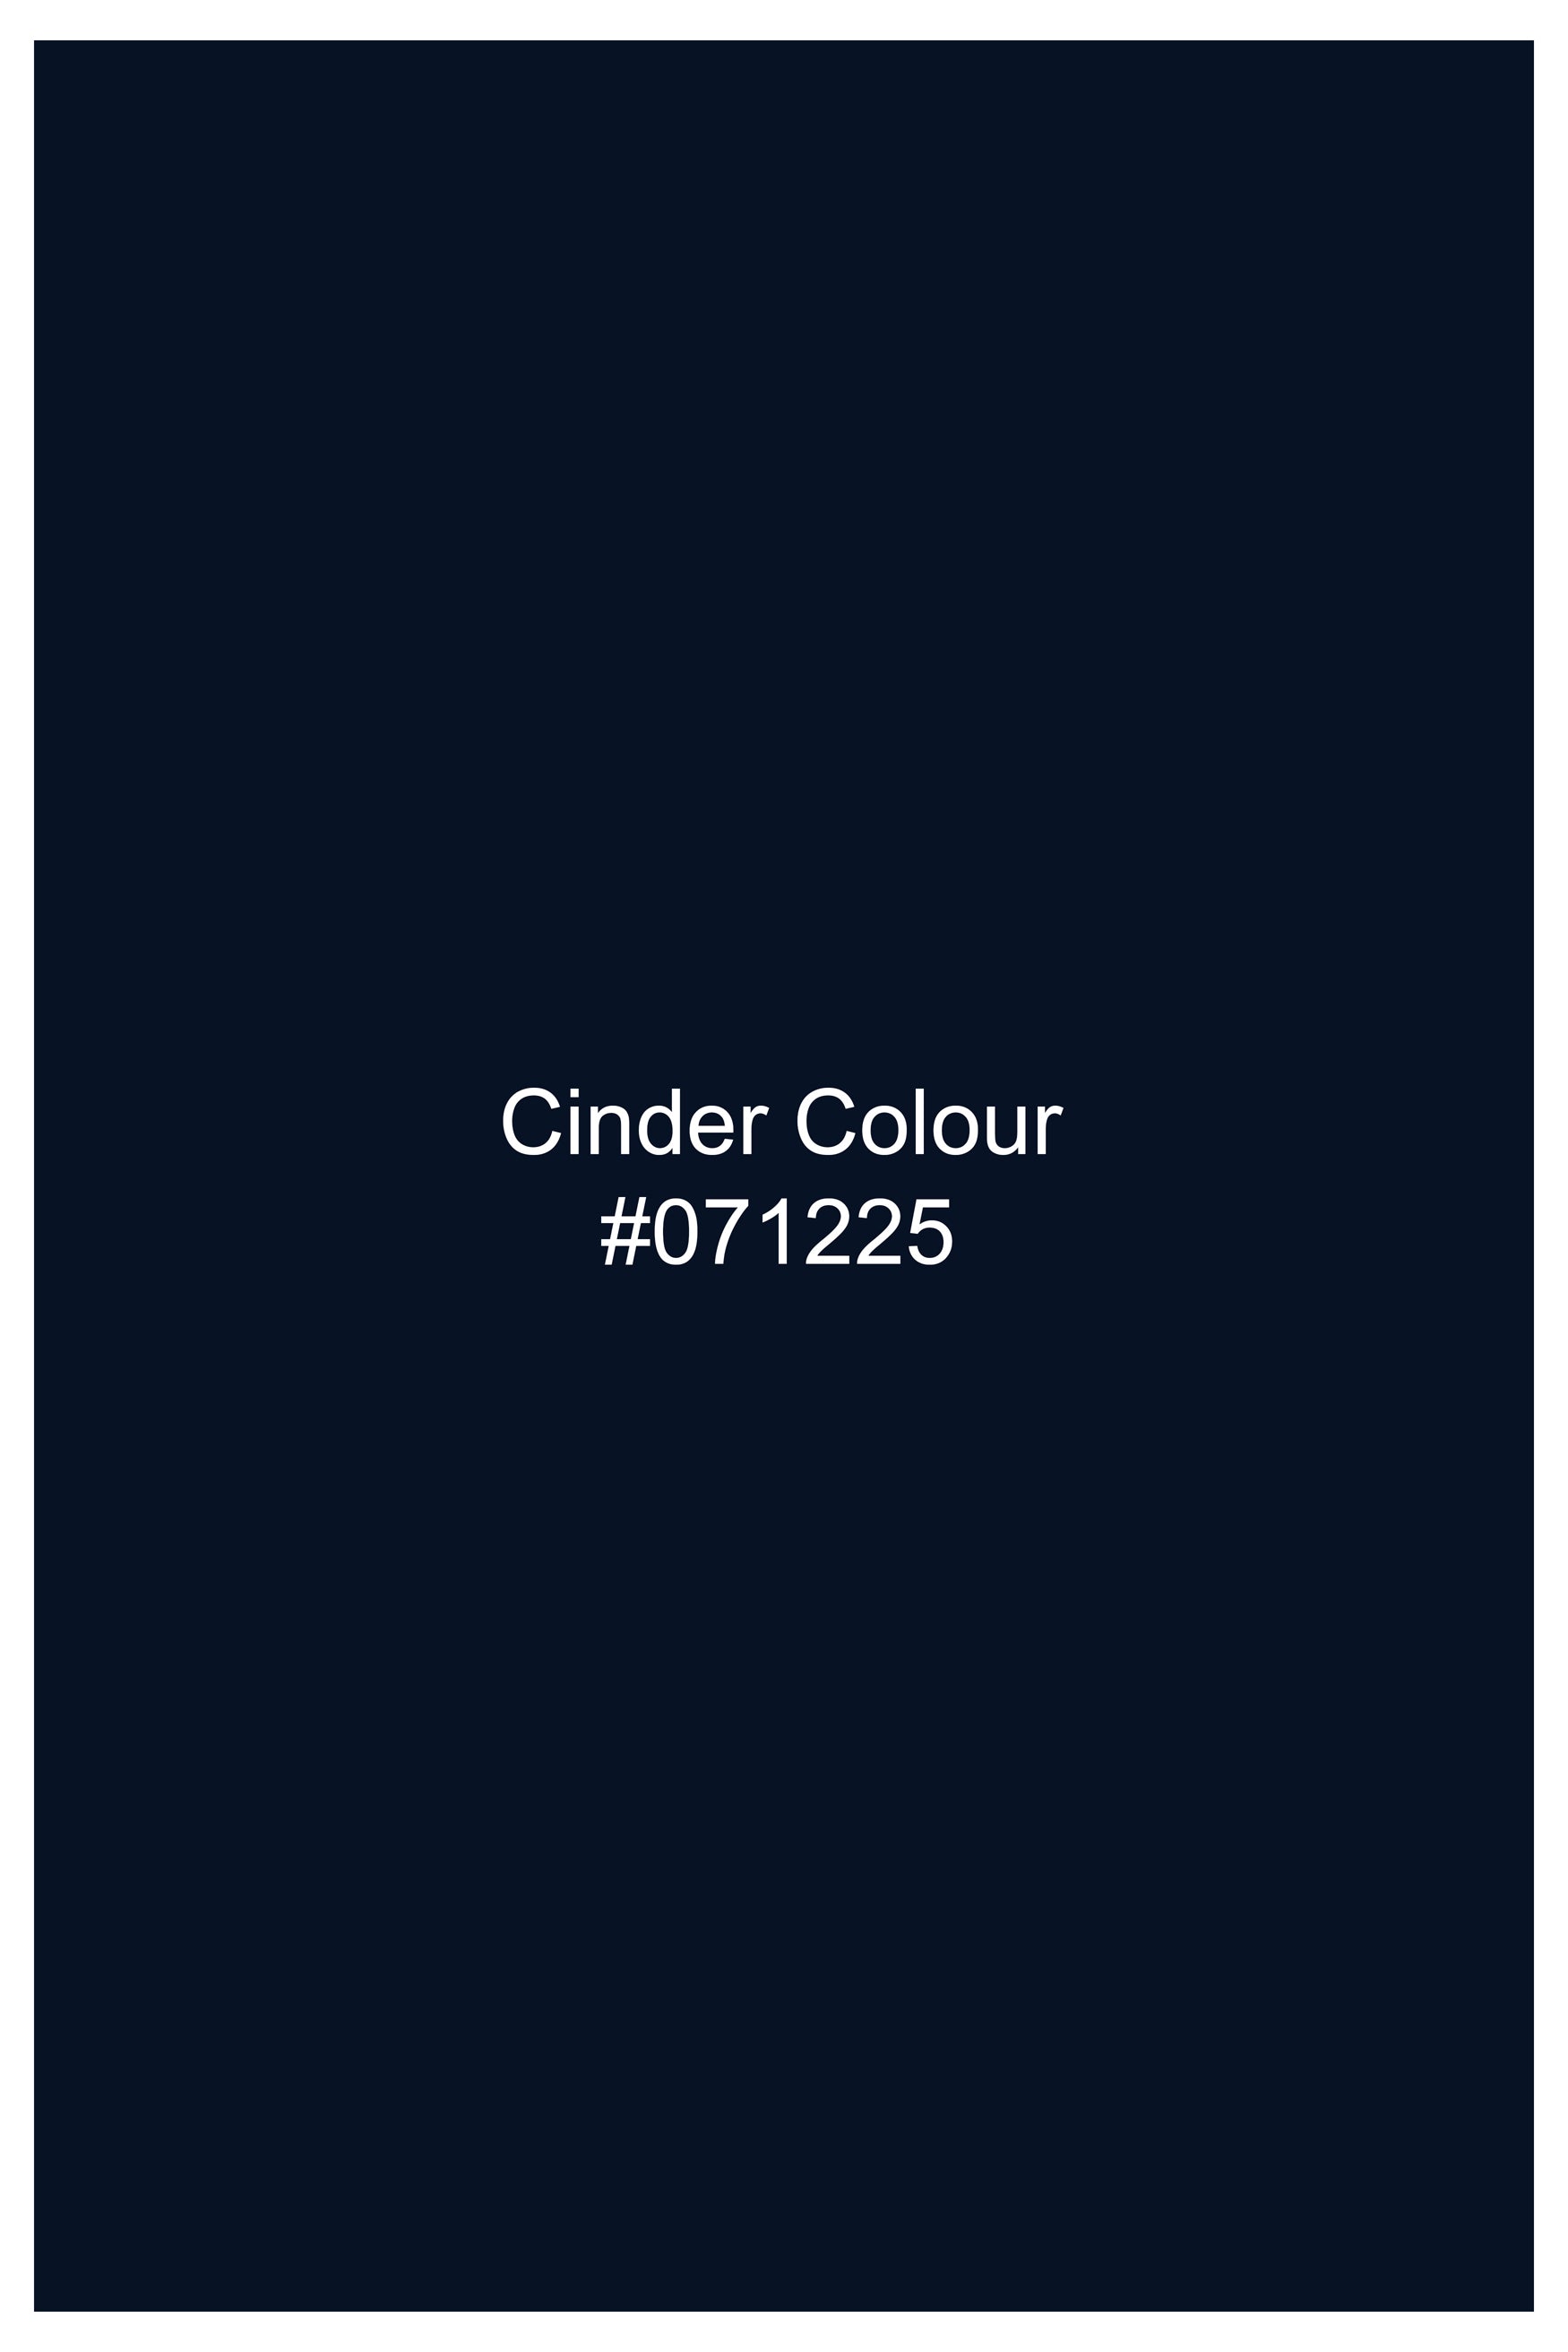 Cinder Blue with White Mandarin Collar Luxurious Linen Shirt 11694-M-WC-BLE-38, 11694-M-WC-BLE-H-38, 11694-M-WC-BLE-39, 11694-M-WC-BLE-H-39, 11694-M-WC-BLE-40, 11694-M-WC-BLE-H-40, 11694-M-WC-BLE-42, 11694-M-WC-BLE-H-42, 11694-M-WC-BLE-44, 11694-M-WC-BLE-H-44, 11694-M-WC-BLE-46, 11694-M-WC-BLE-H-46, 11694-M-WC-BLE-48, 11694-M-WC-BLE-H-48, 11694-M-WC-BLE-50, 11694-M-WC-BLE-H-50, 11694-M-WC-BLE-52, 11694-M-WC-BLE-H-52